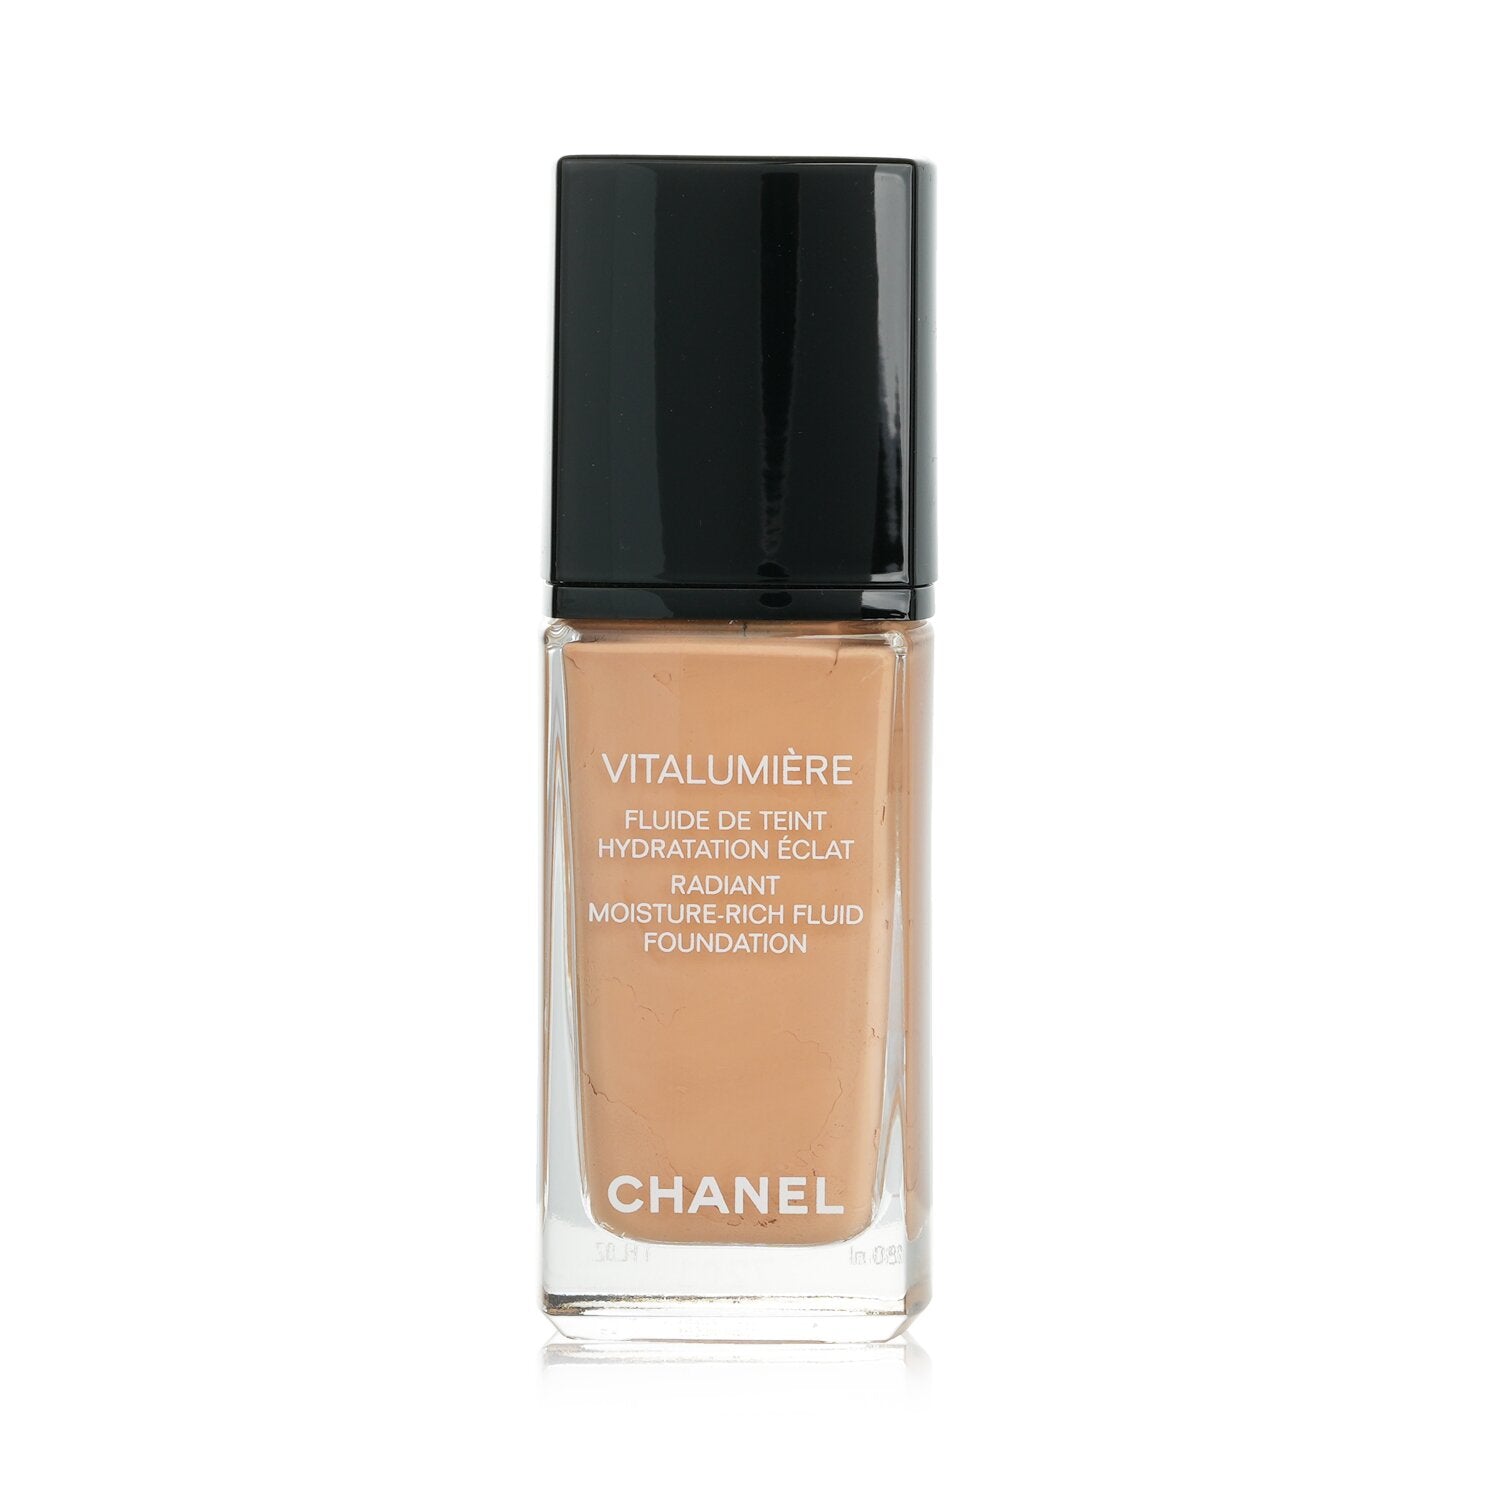 Chanel Le Correcteur De Chanel Longwear Concealer - # 20 Beige 7.5g